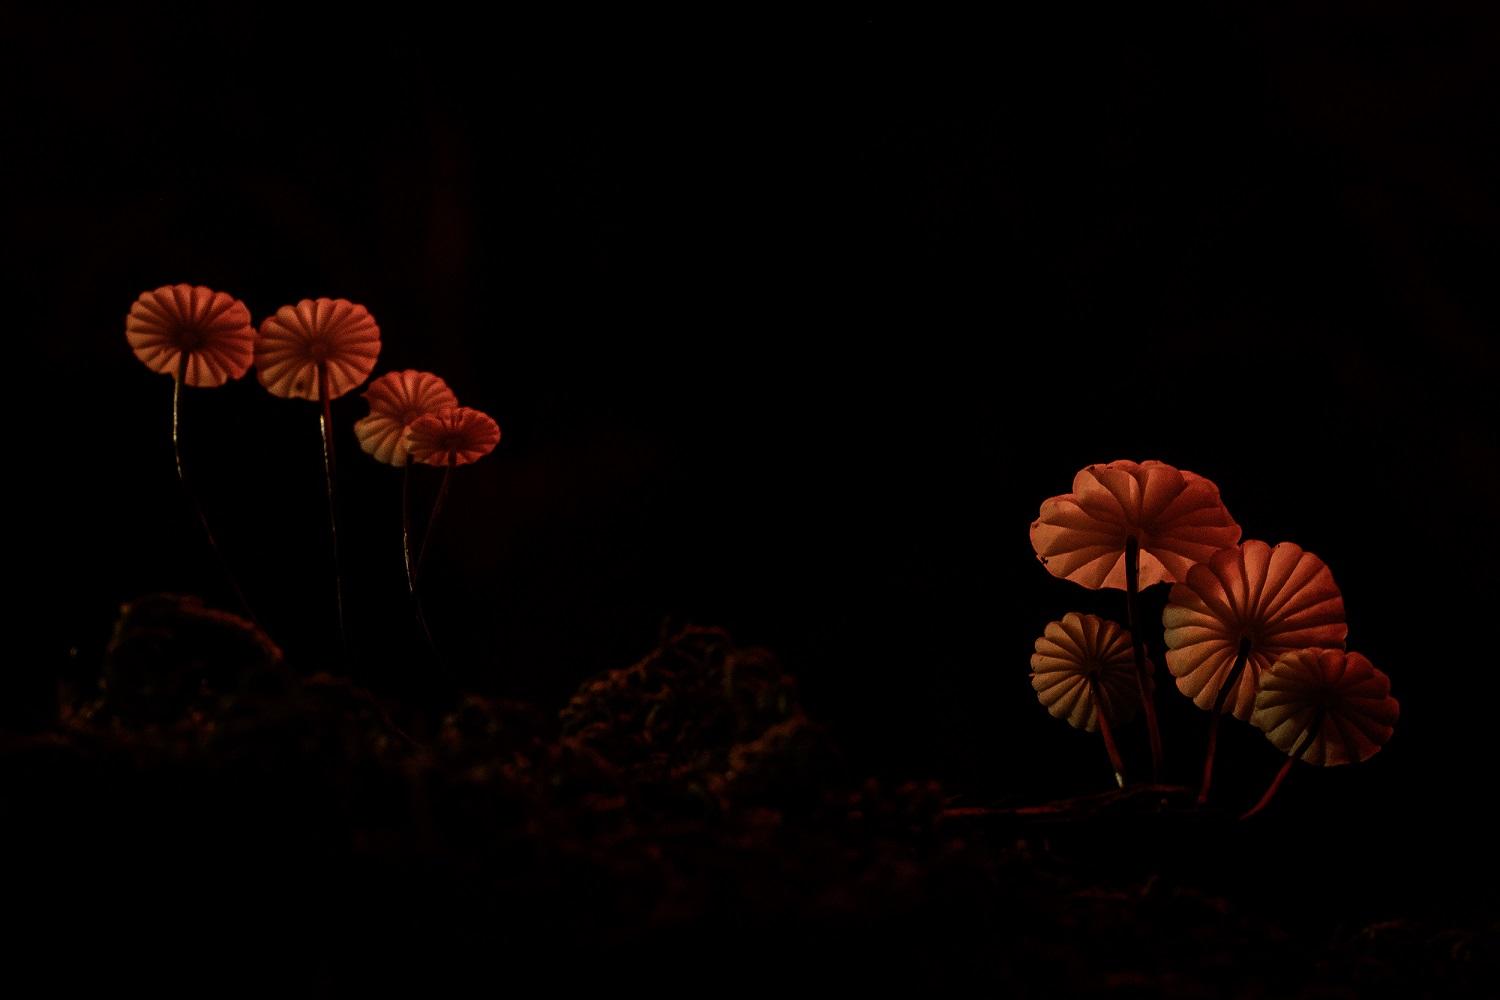 "Red lanterns" - Fabio Sartori 